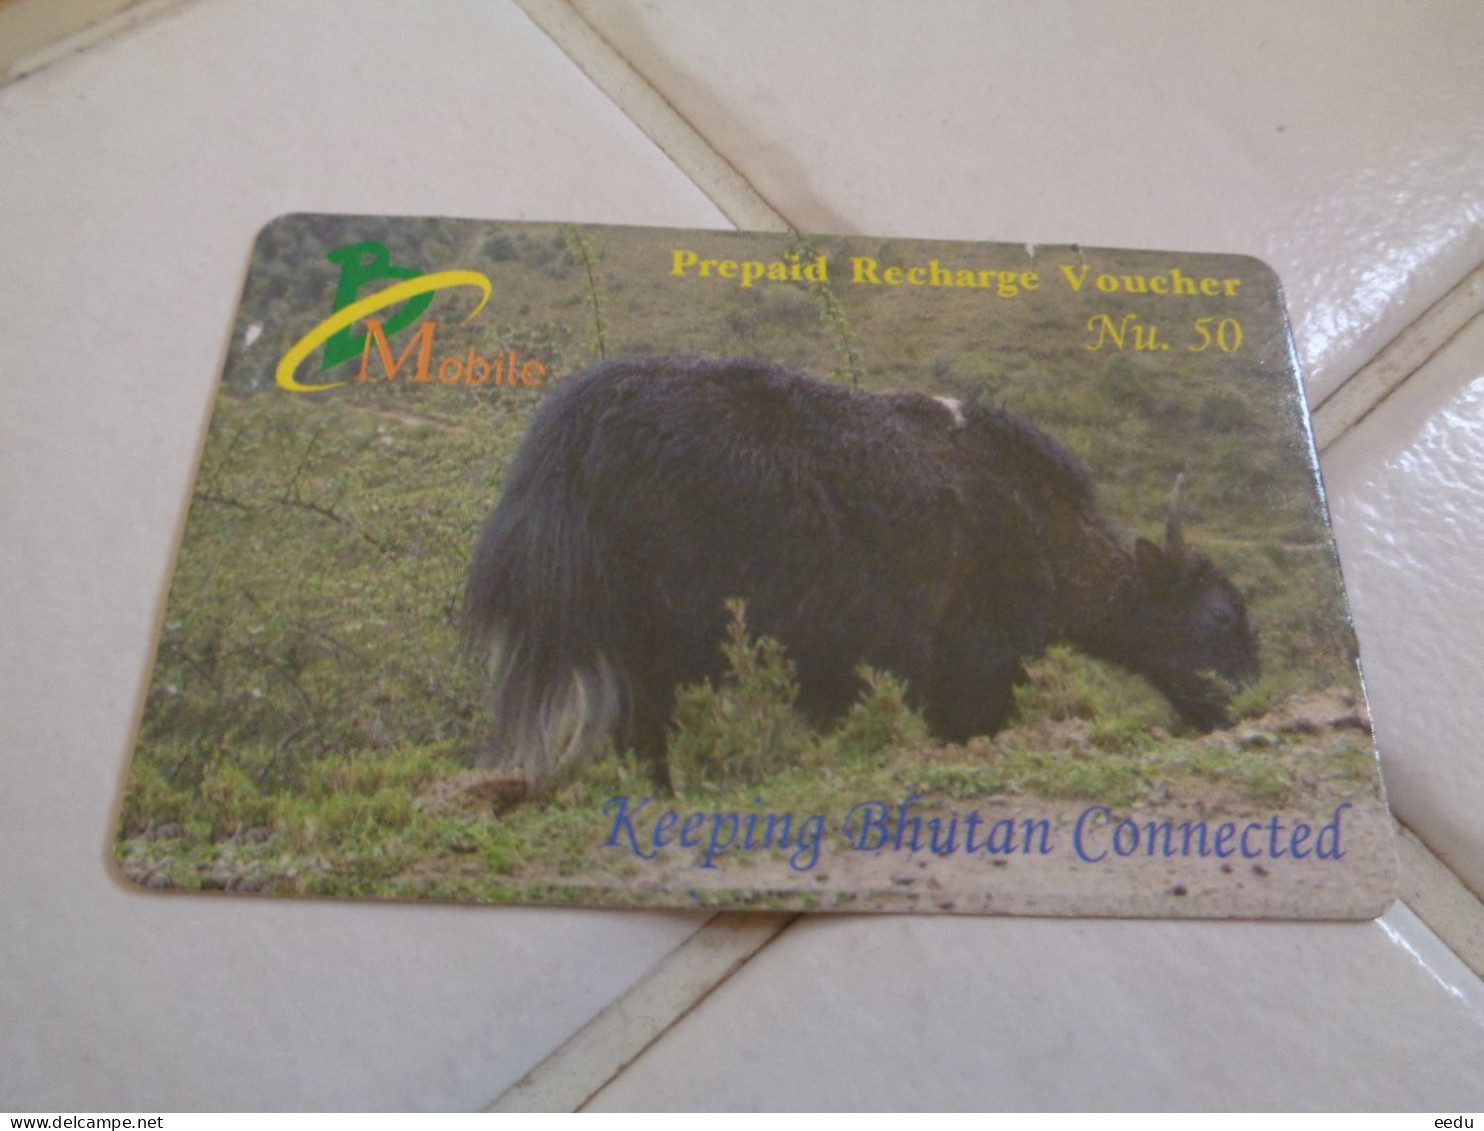 Bhutan Phonecard - Bhoutan